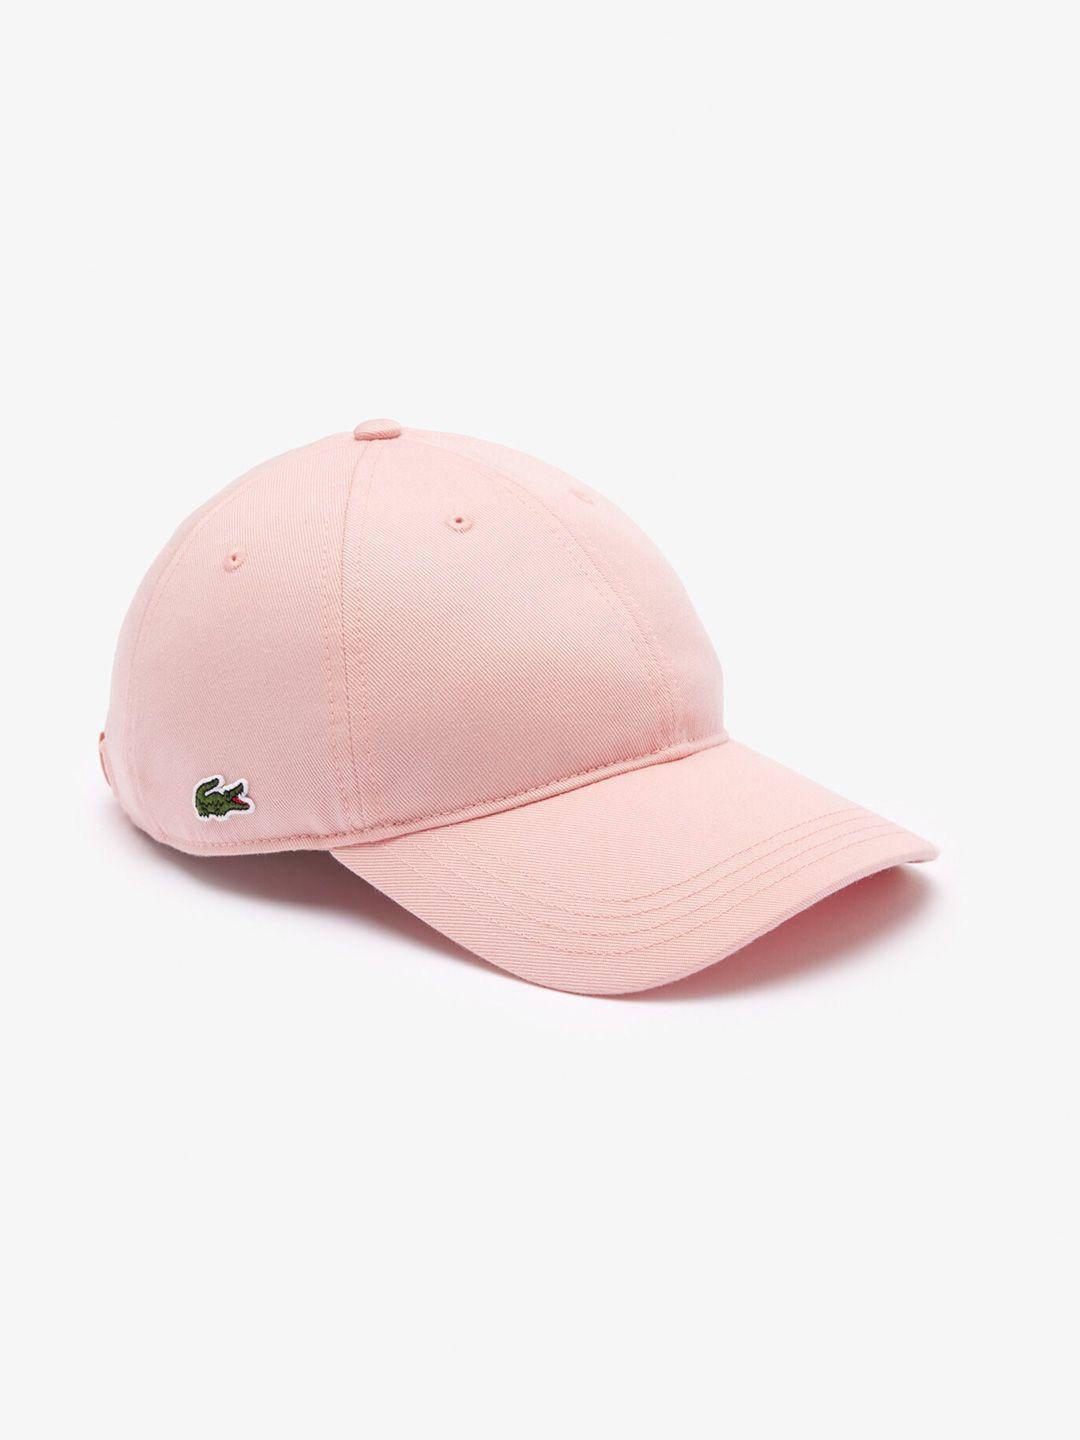 lacoste-men-pink-baseball-cap